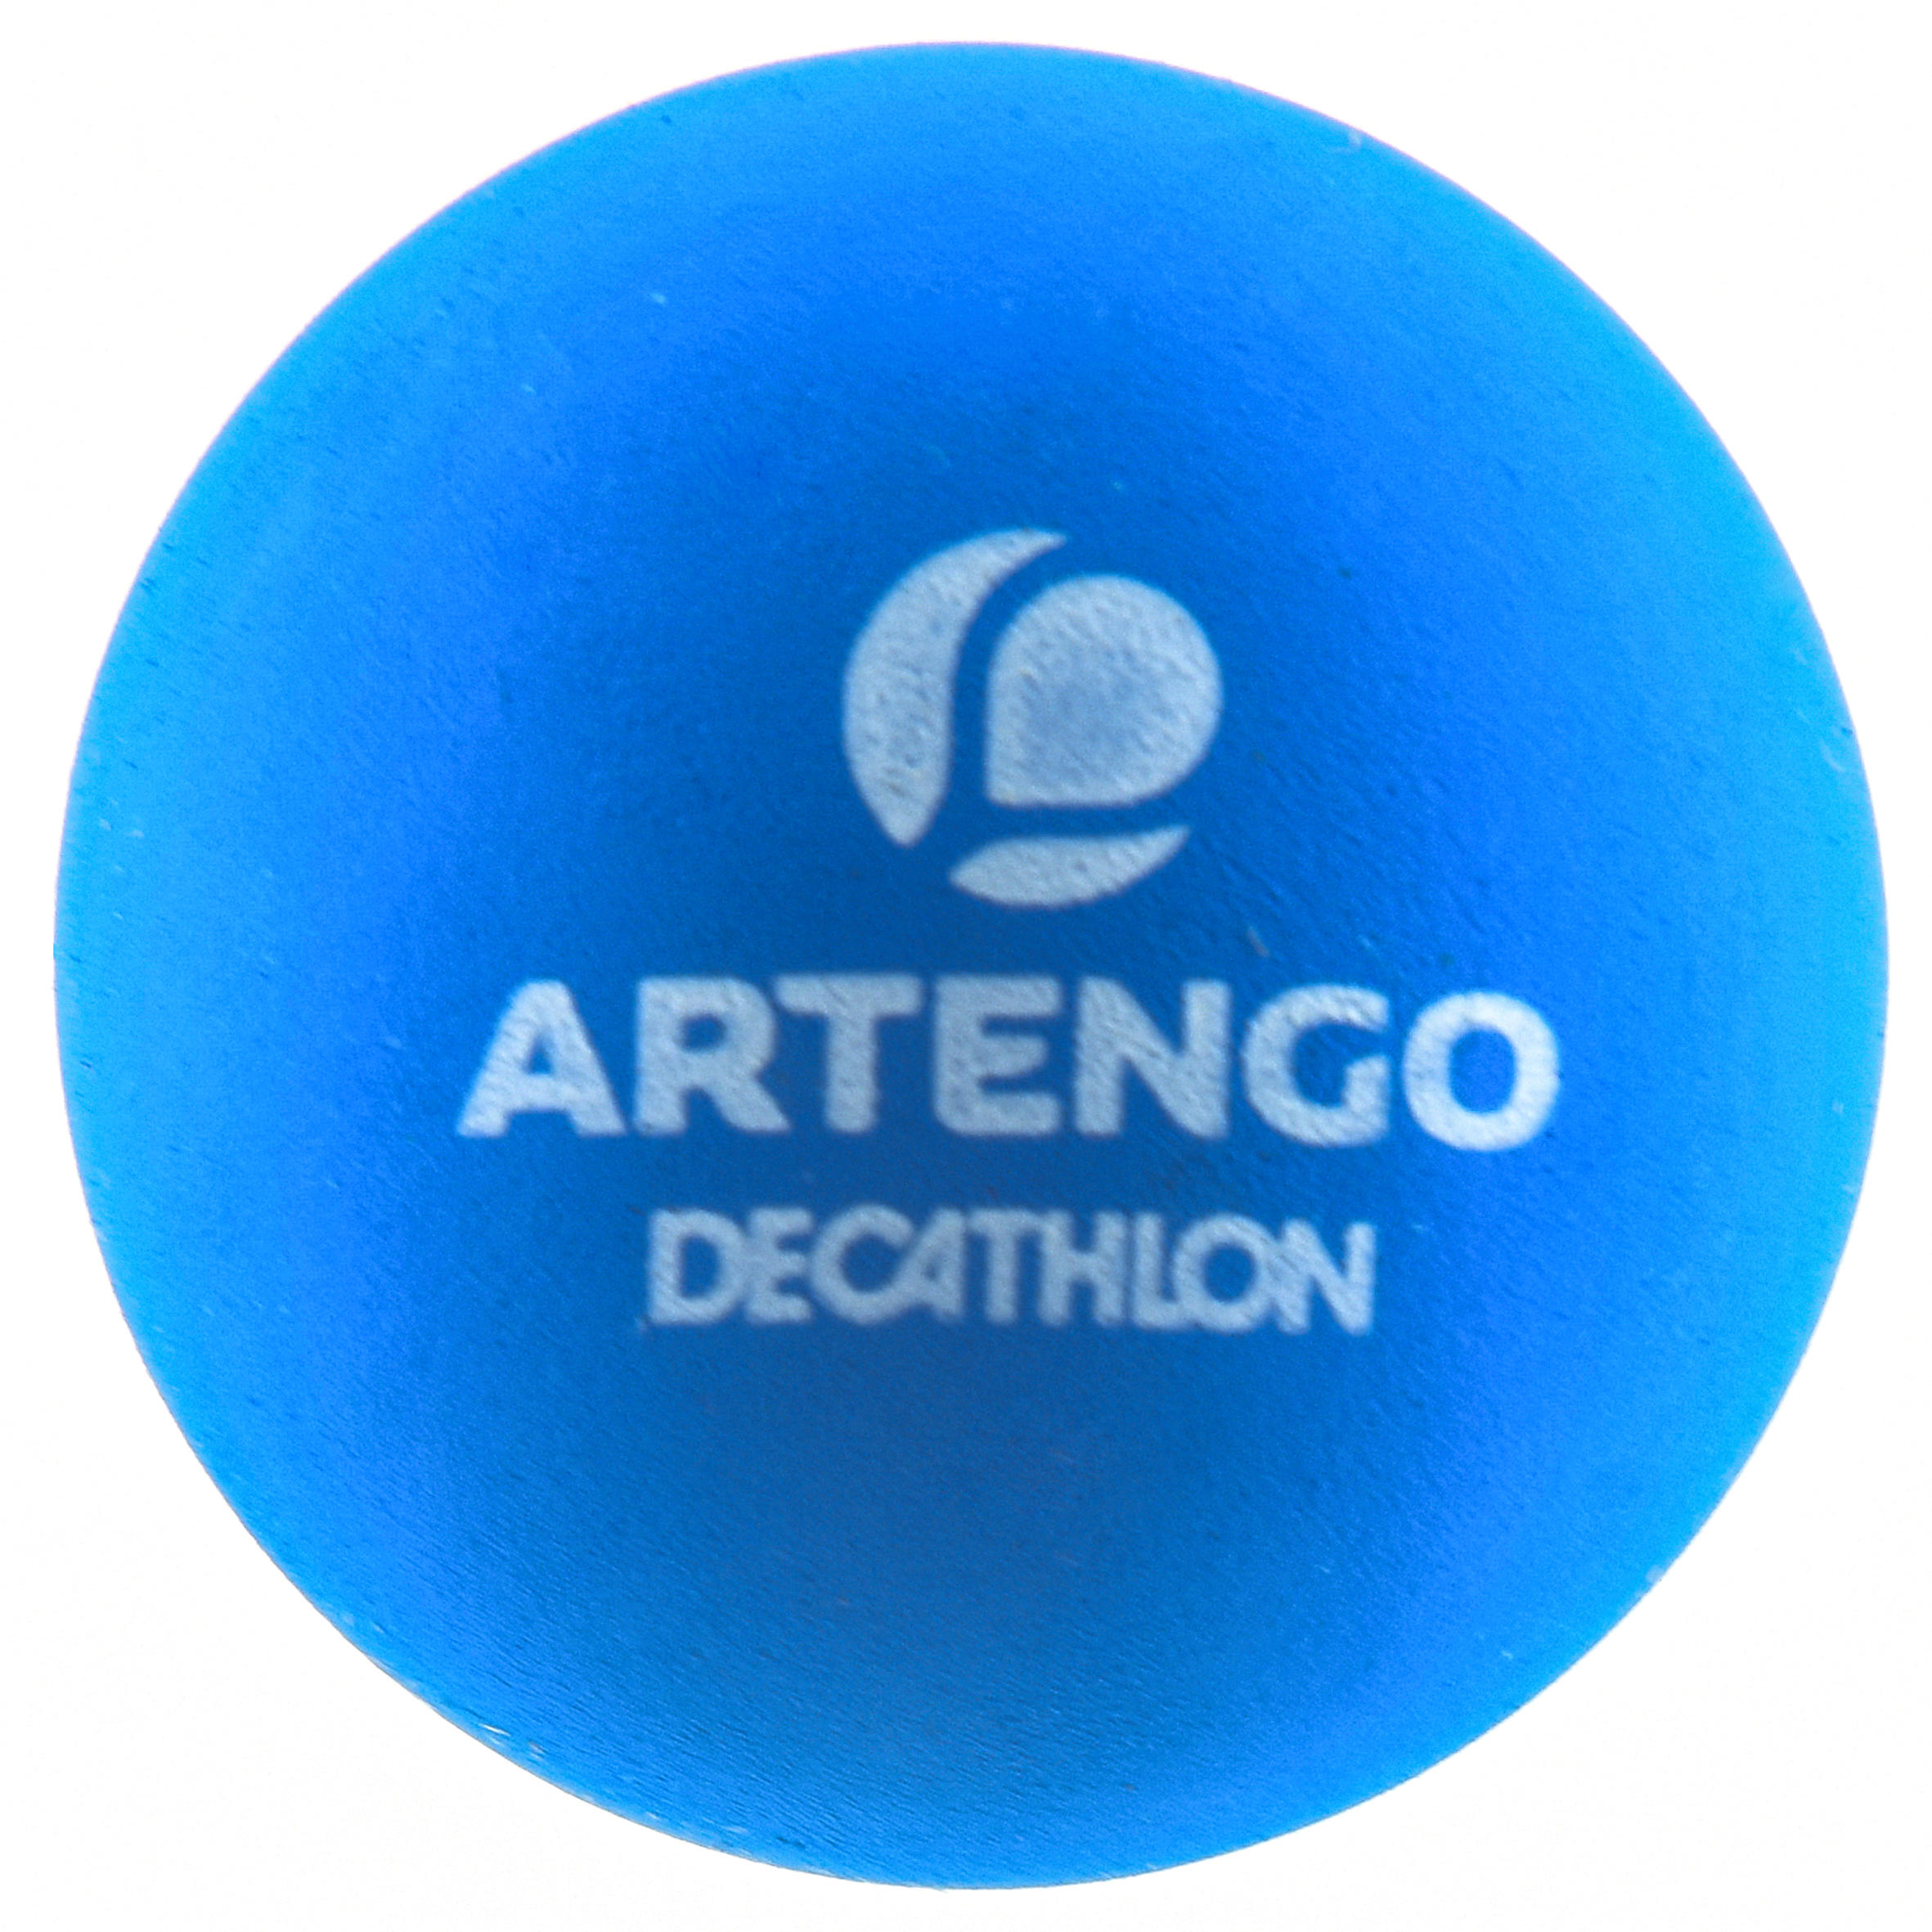 squash ball decathlon